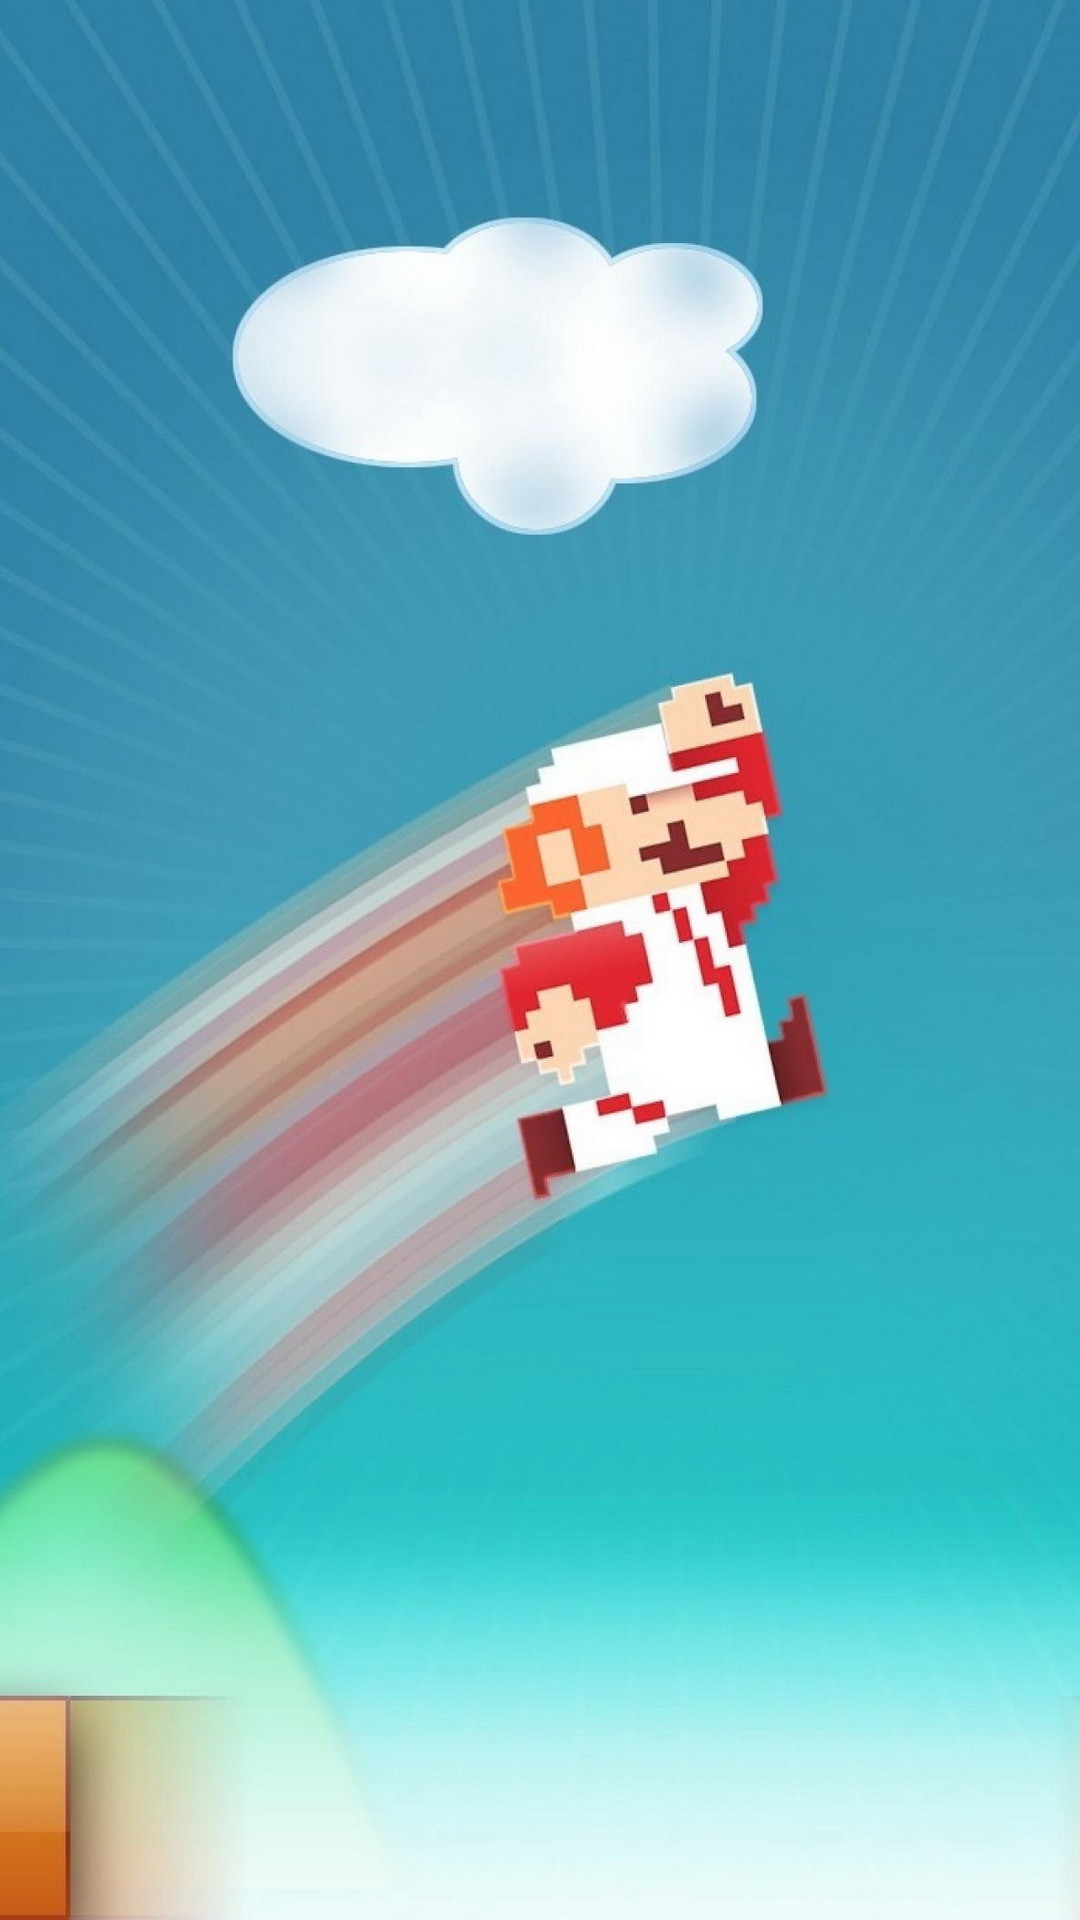 1080x1920 Super Mario â Find more nerdy #iPhone + #Android #Wallpapers and # Backgrounds